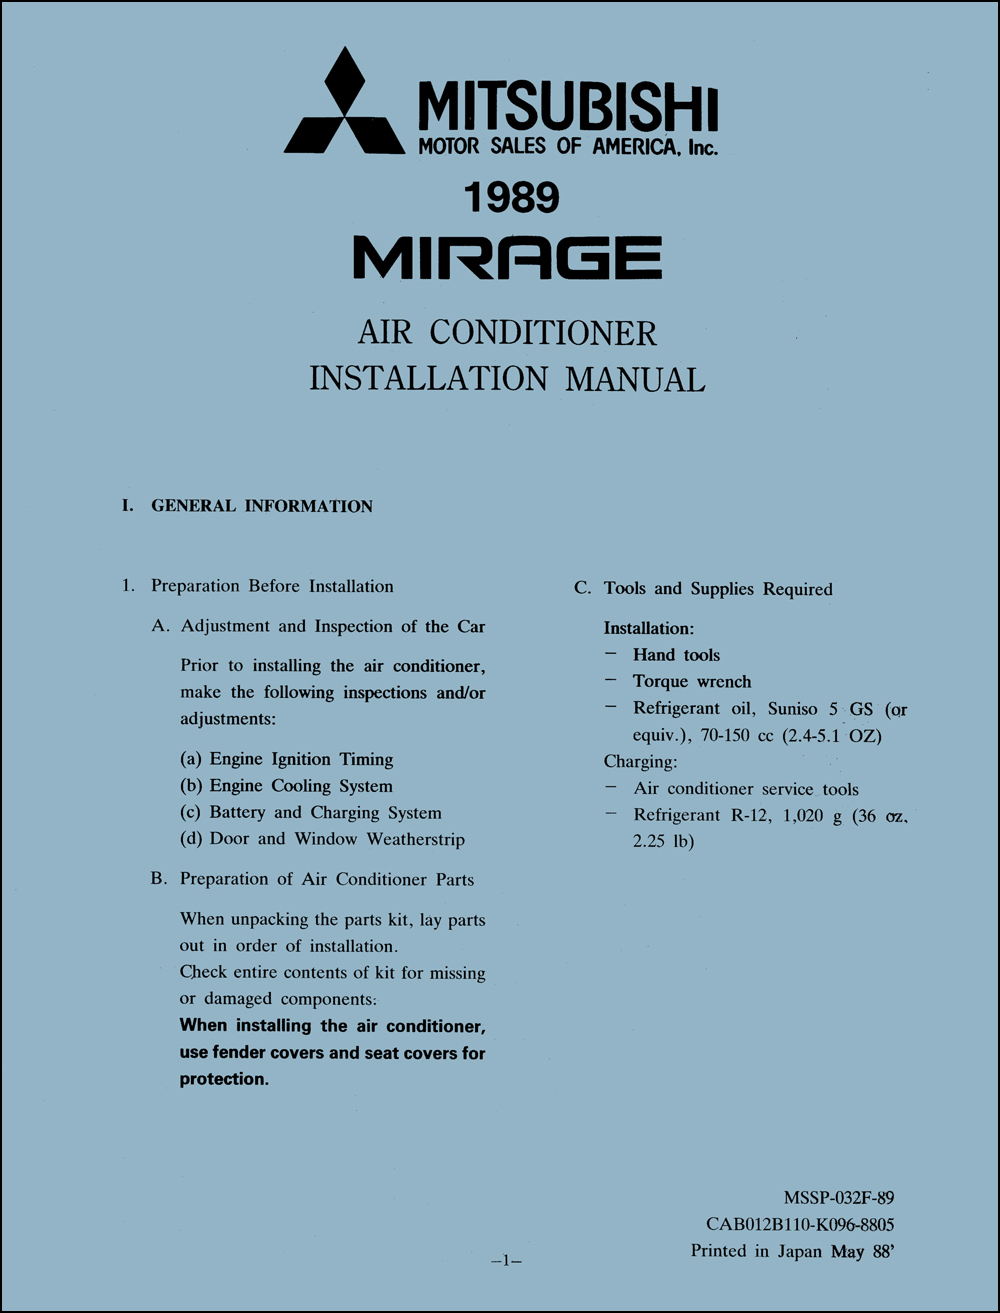 1989 Mitsubishi Mirage Air Conditioner Installation Instruction Manual Original A/C